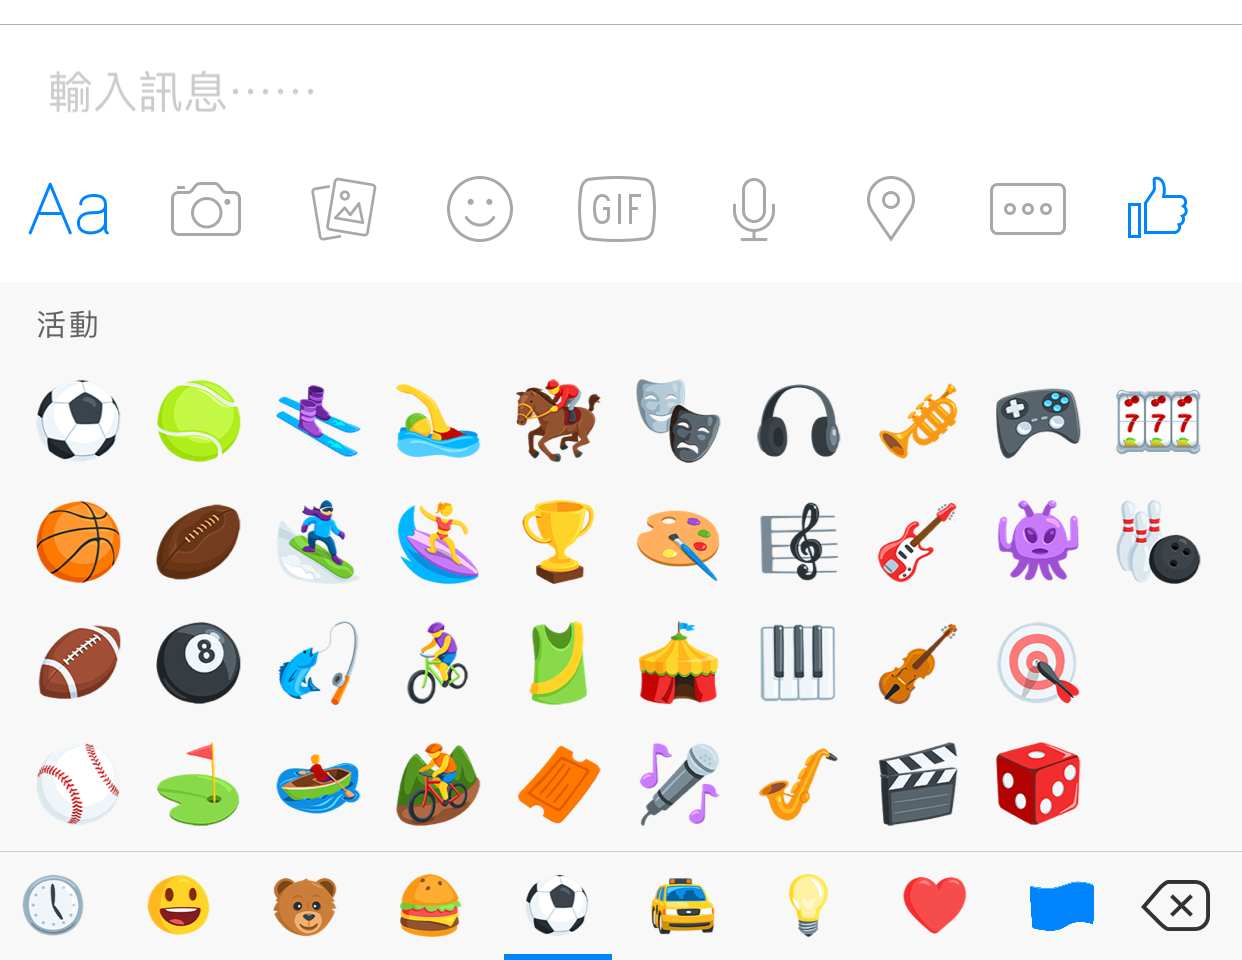 facebook-messenger-1500-new-emoji_04